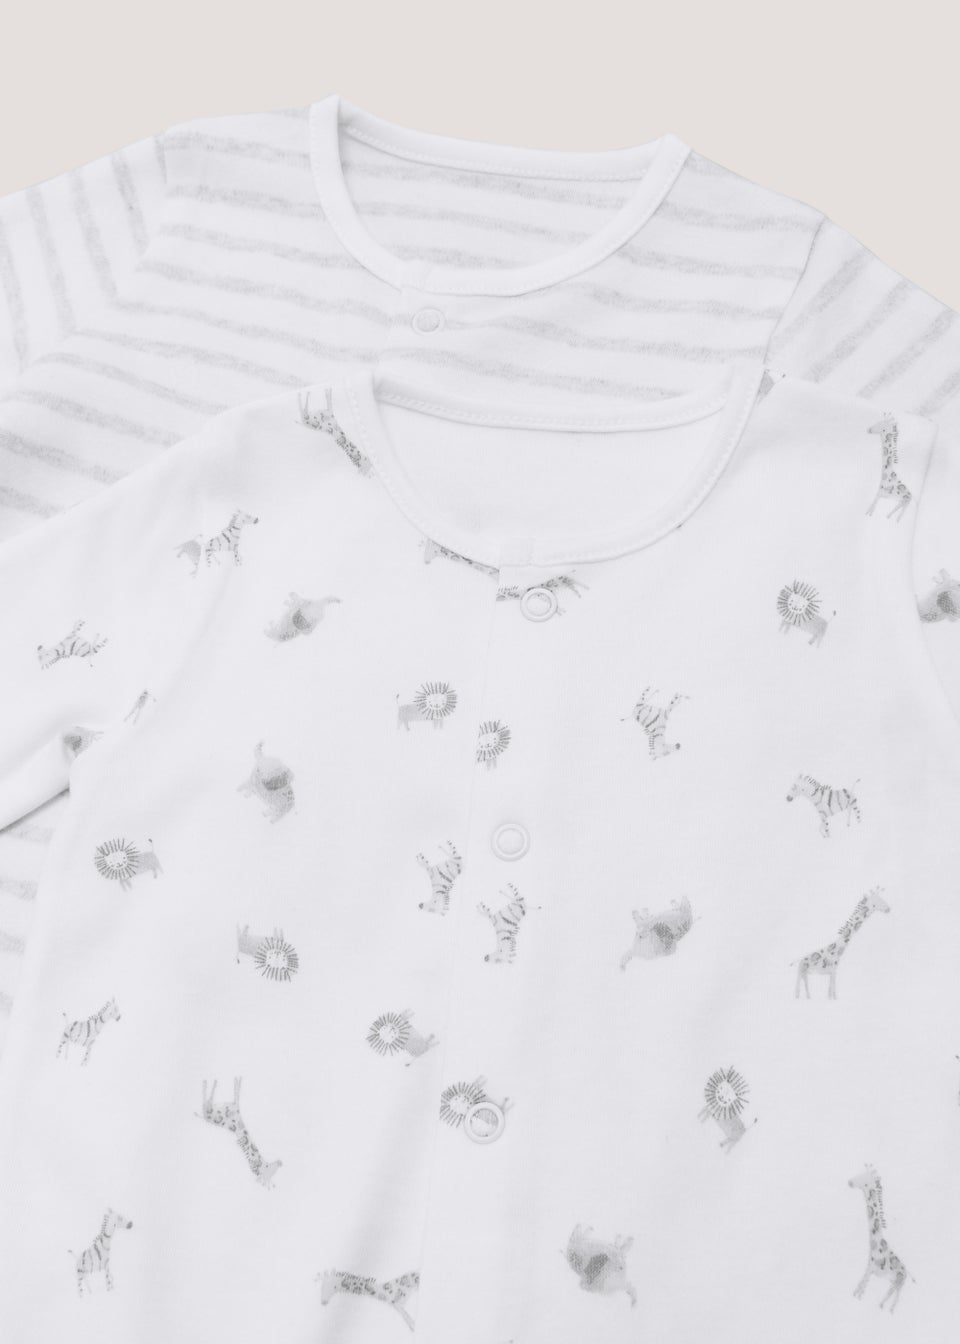 Baby 2 Pack Grey Safari Print Sleepsuits (Newborn-23mths)